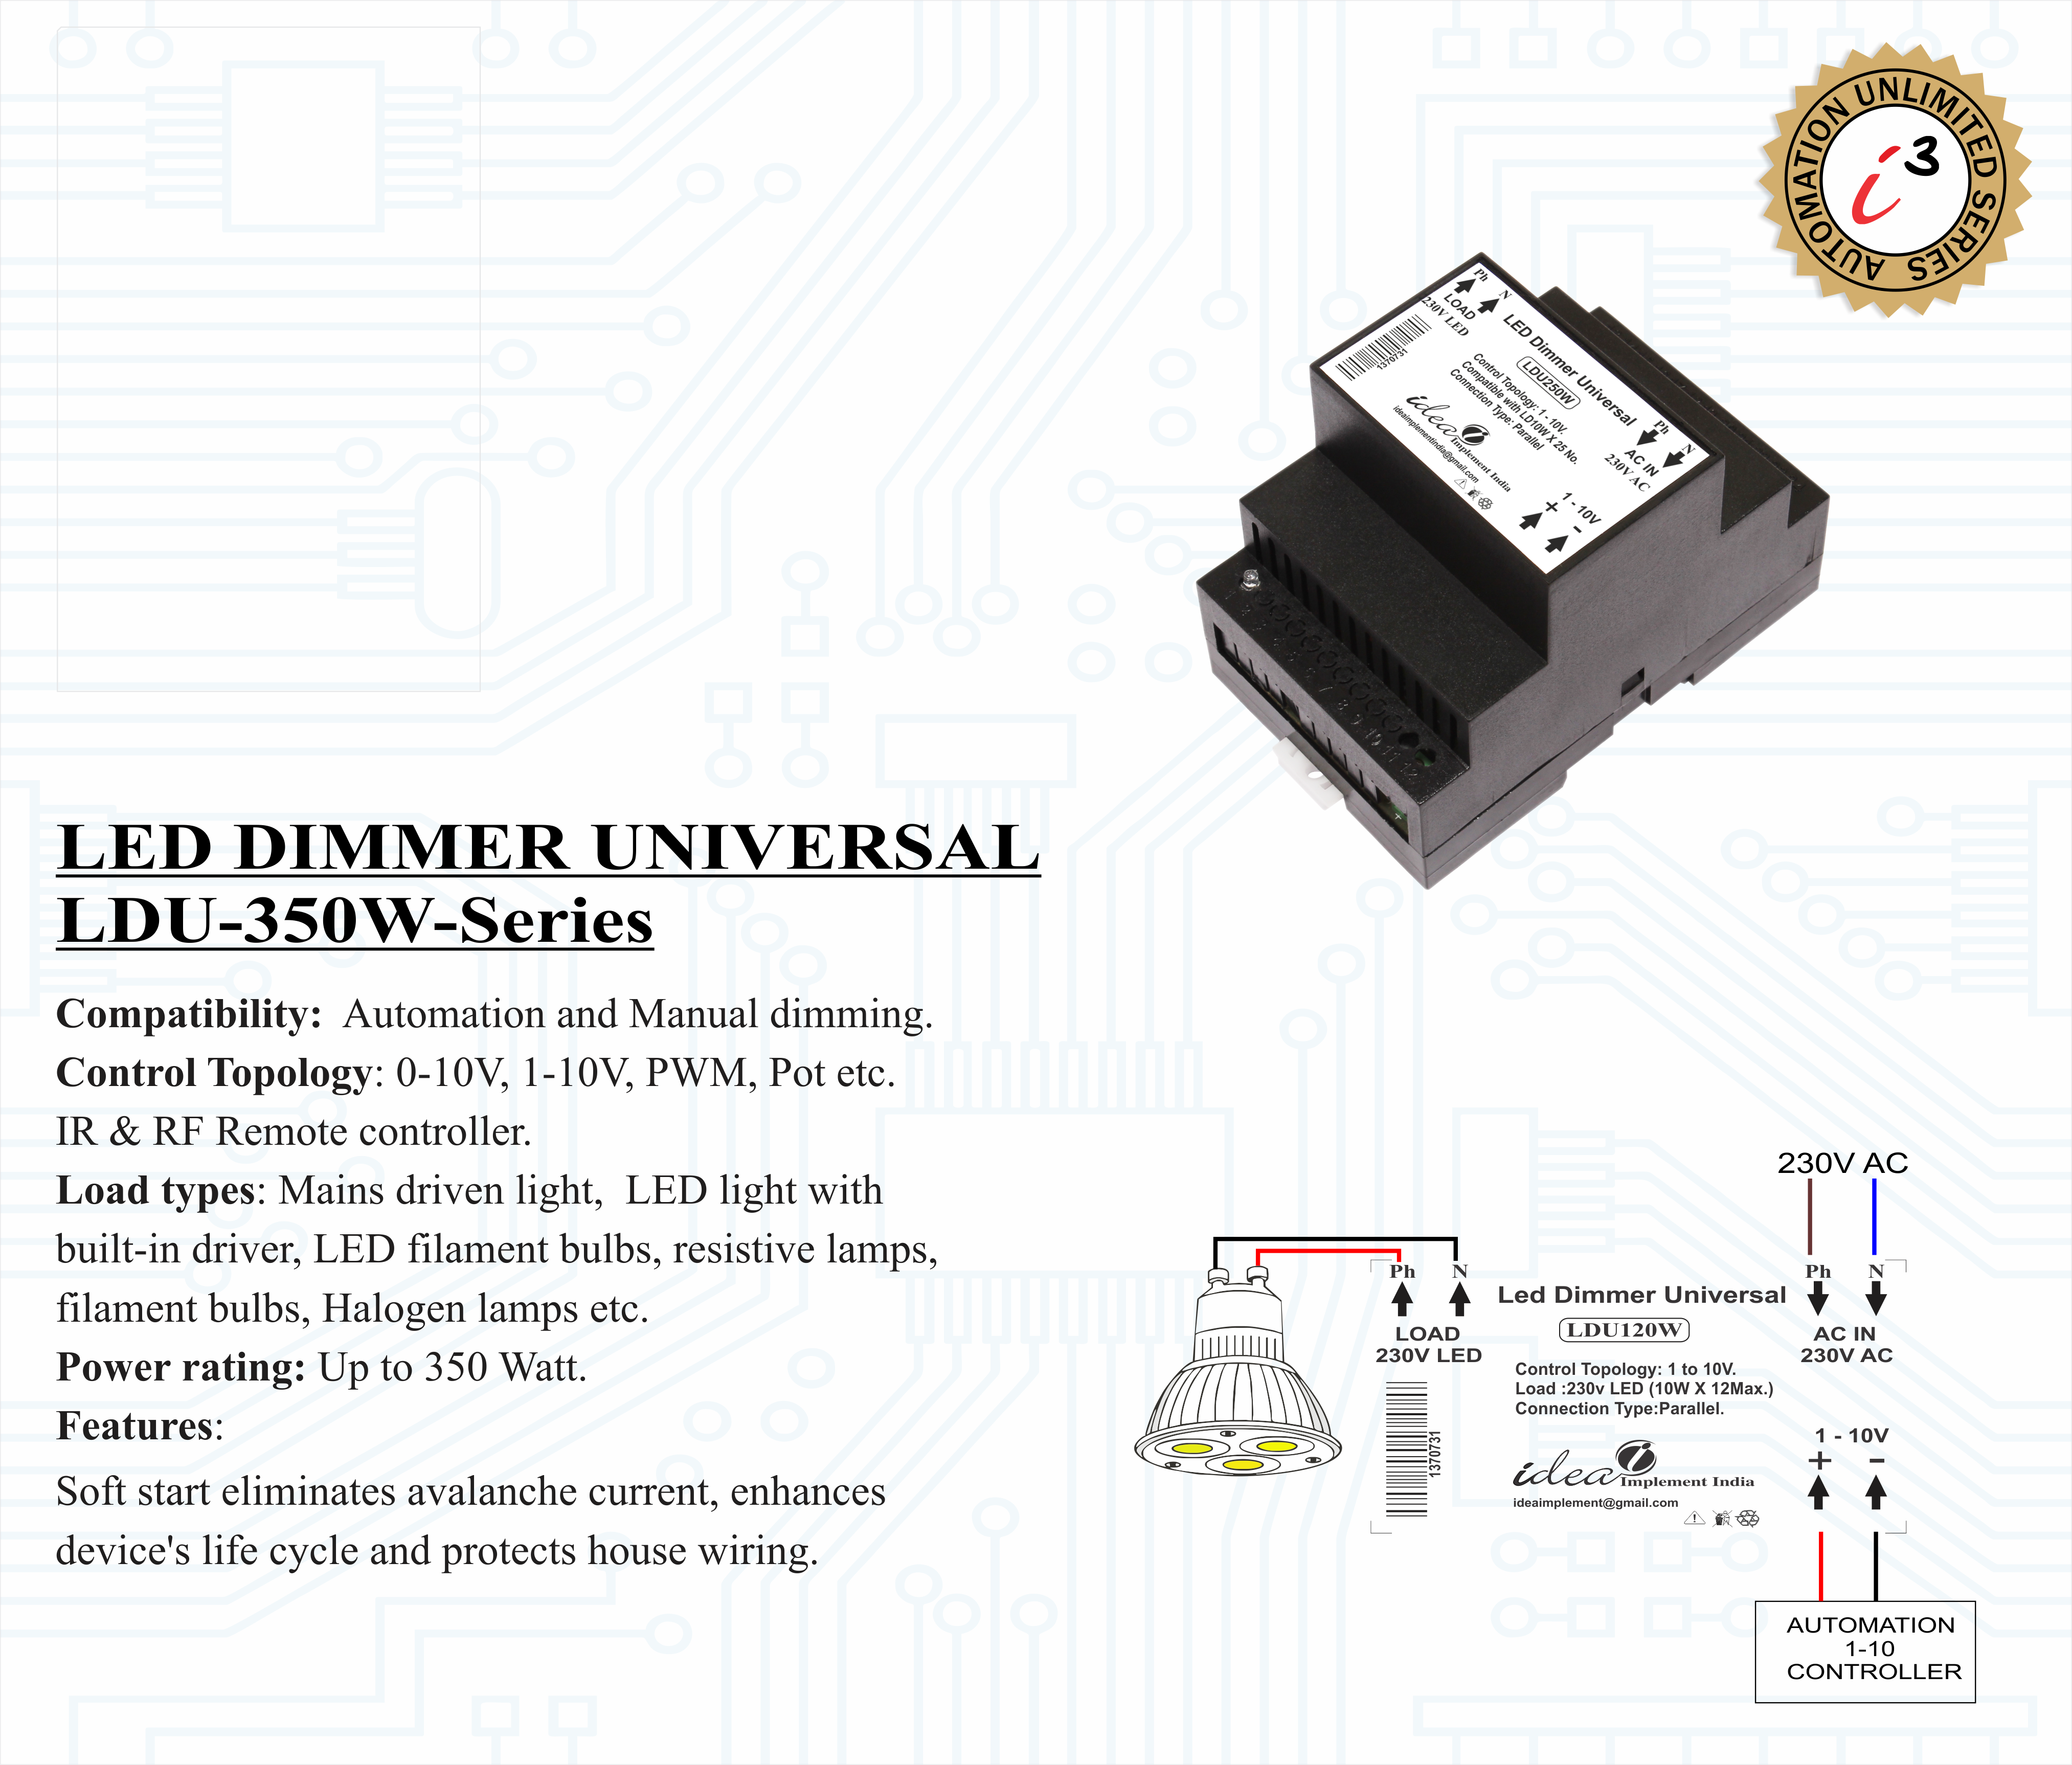 LED DIMMER UNIVERSAL LDU-350W-SERIES